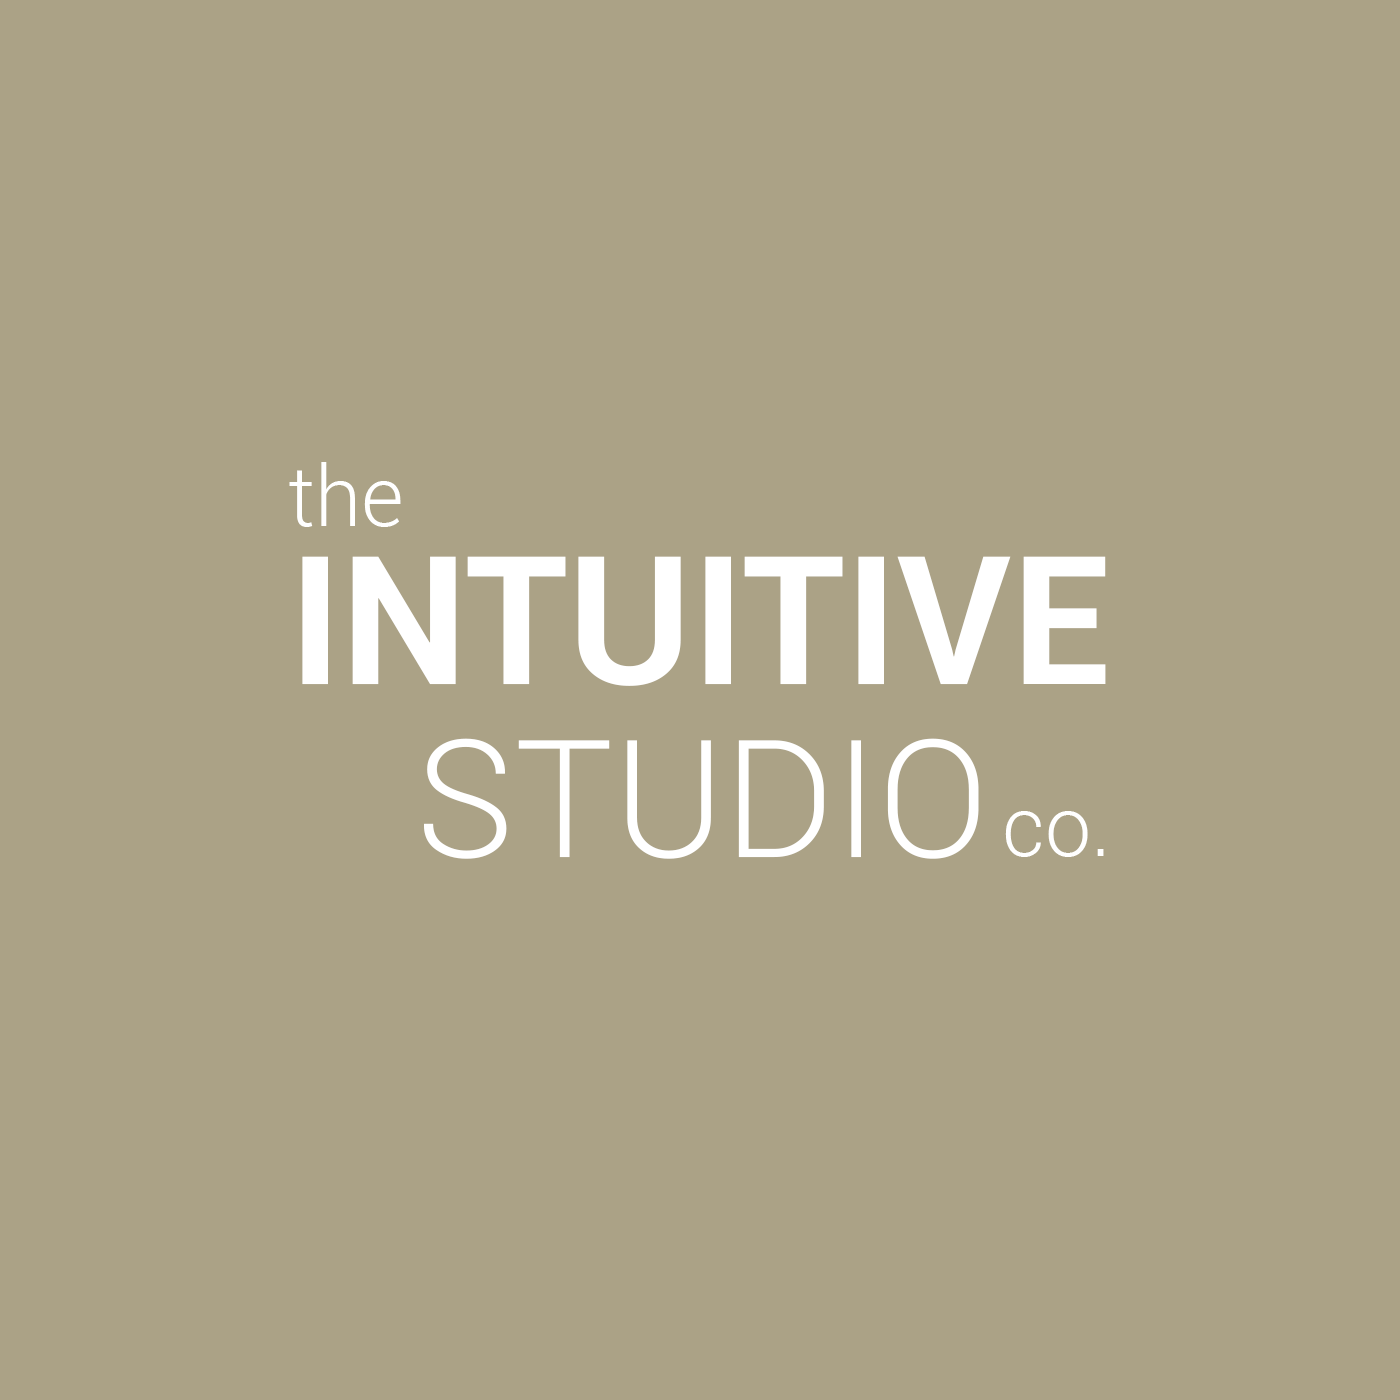 The Intuitive Studio